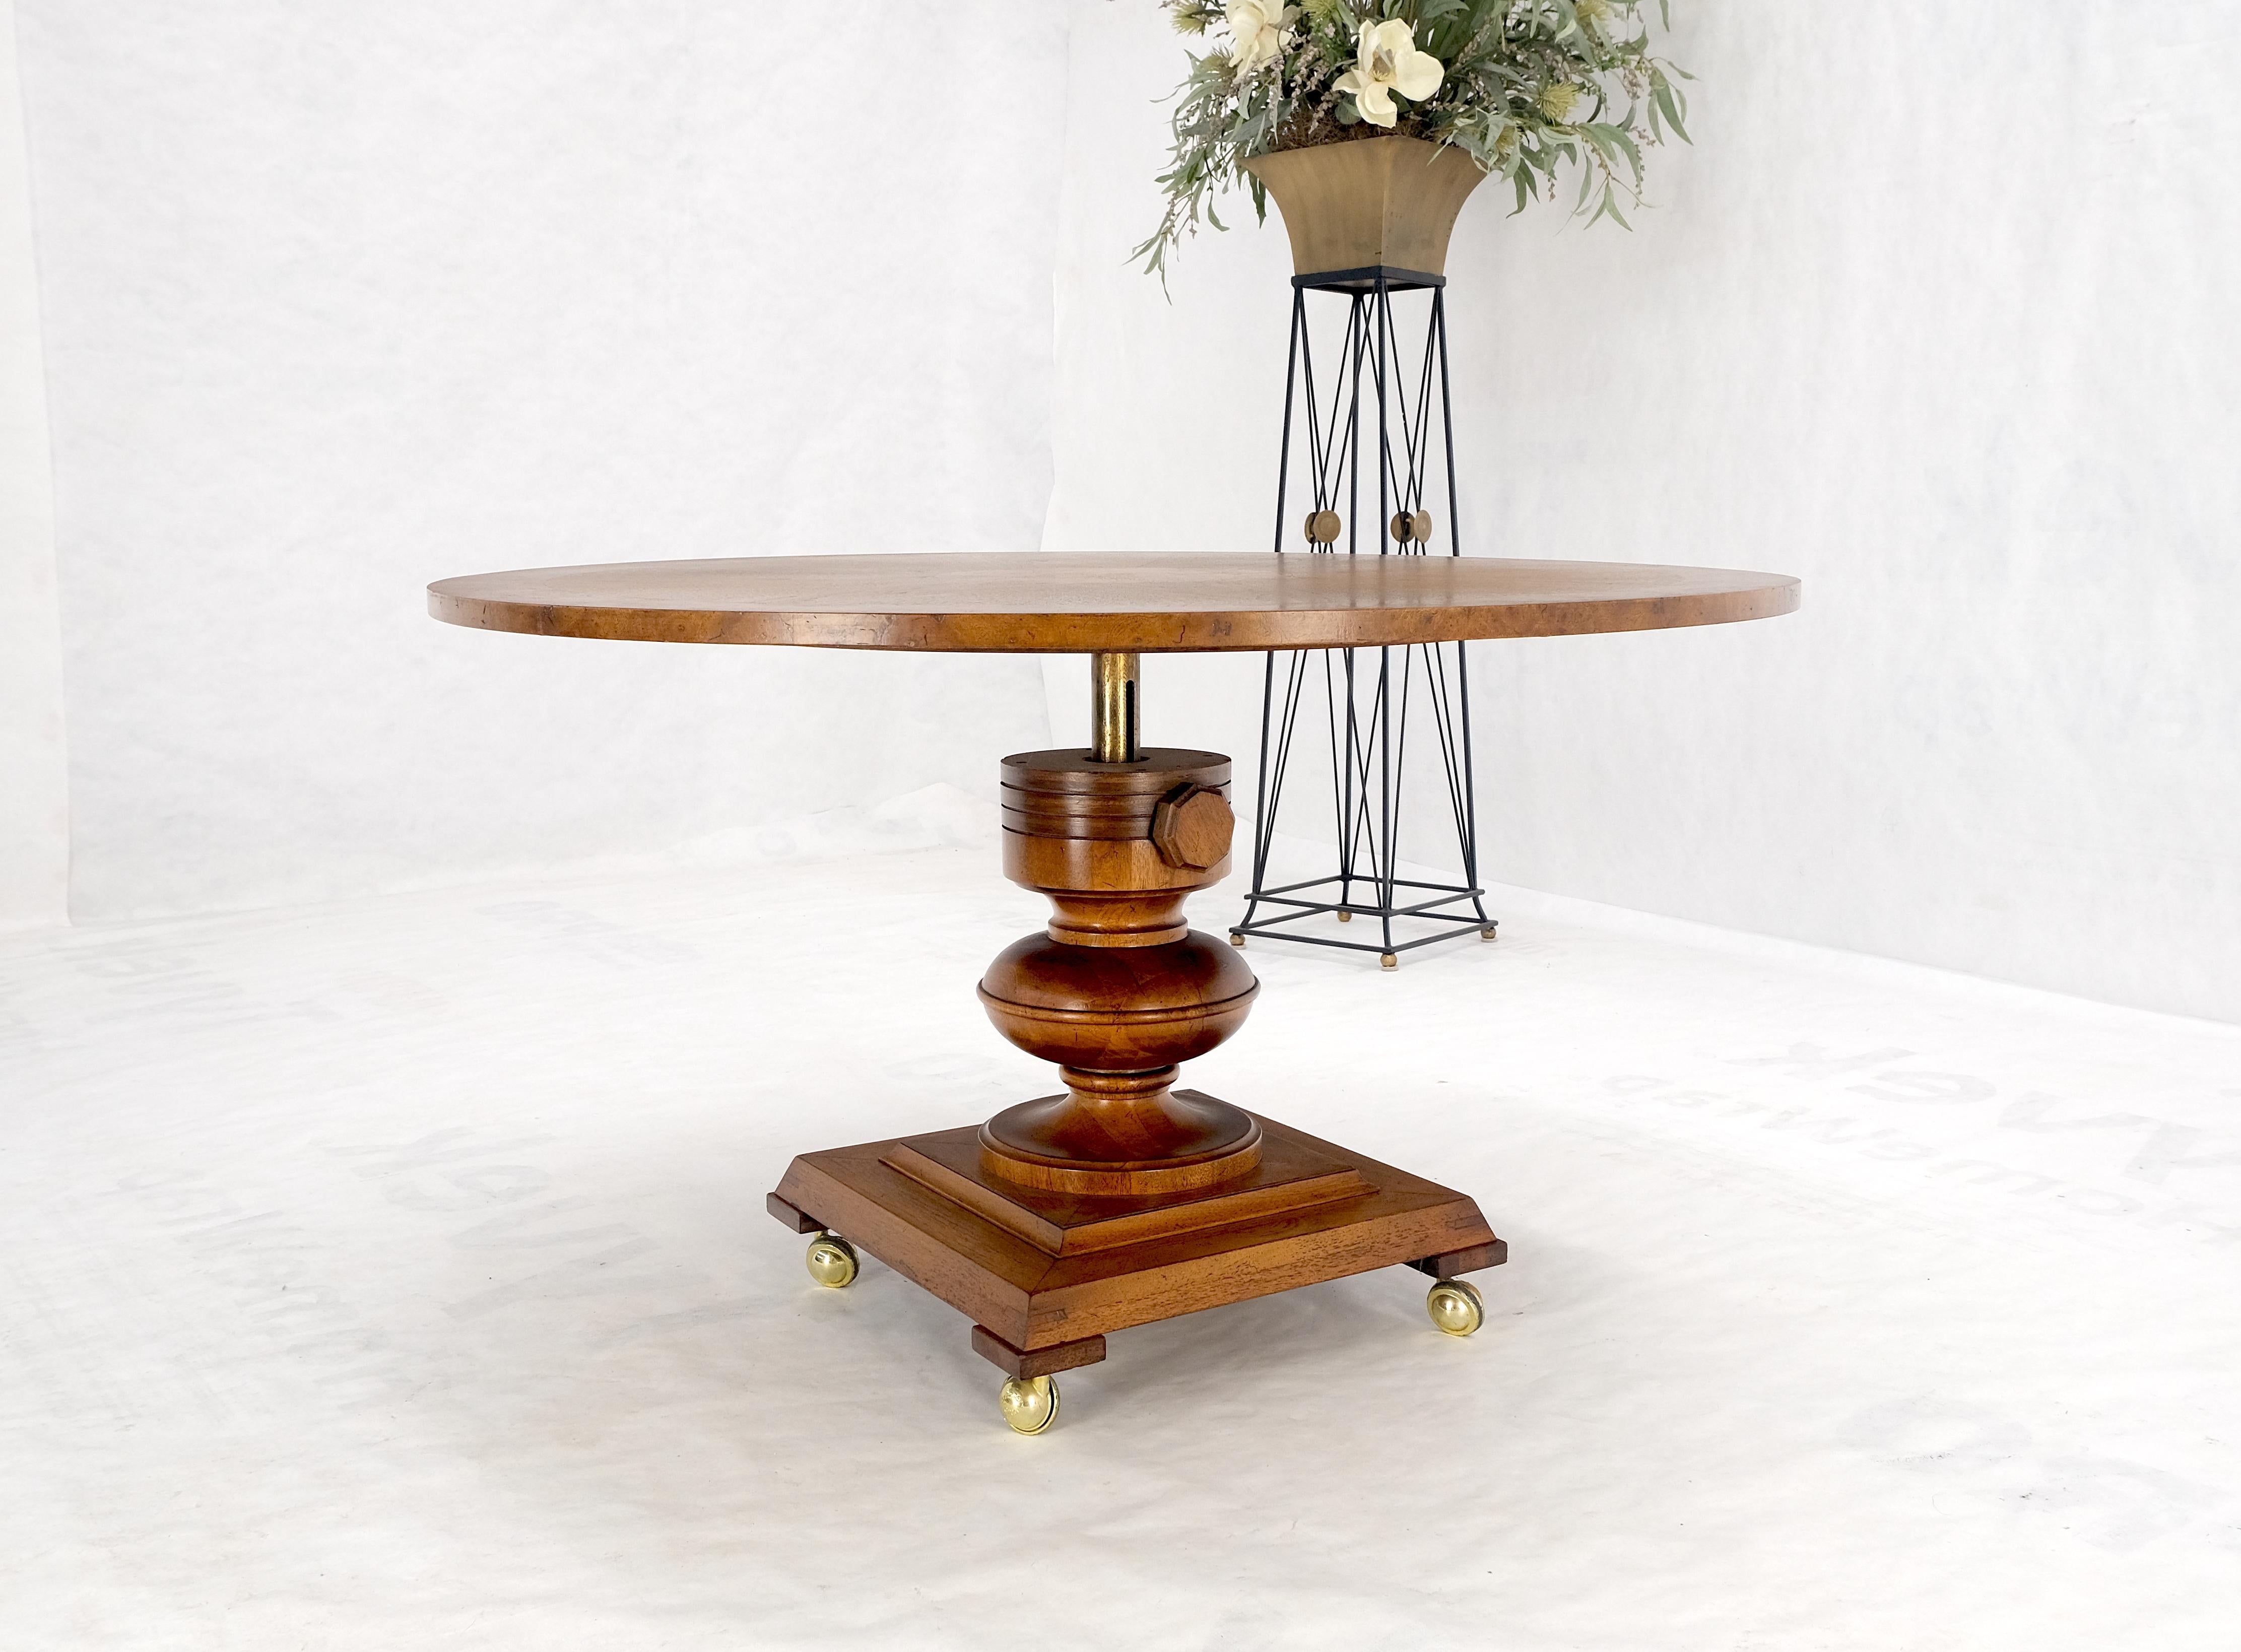 Round Burl Wood Adjustable Height Single Pedestal Base Dining-Coffee Table MINT!
Rare adjustable height Table 25-29